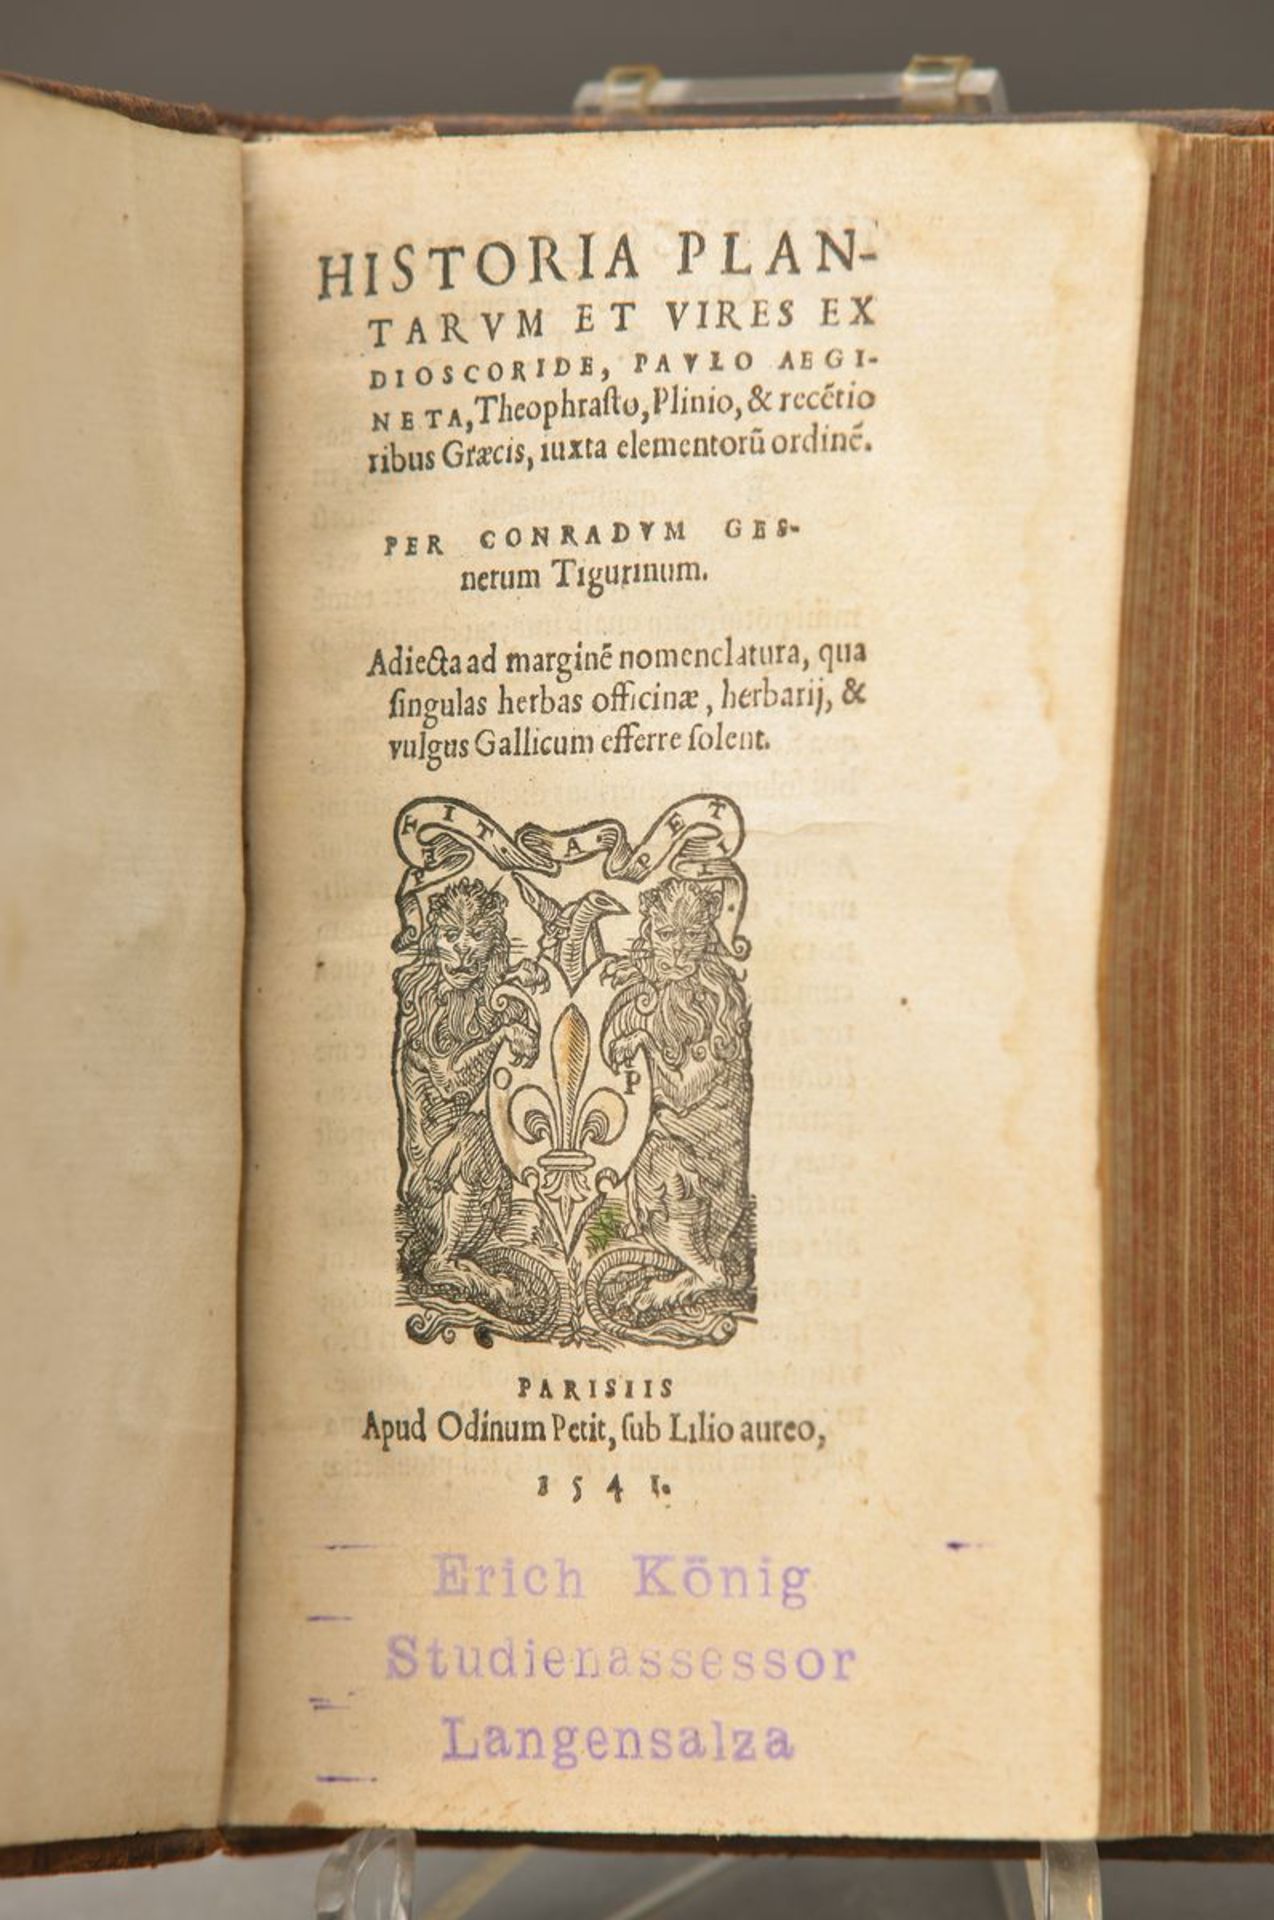 Conrad Gressner, Historia Plantarvm et vires Ex, 1541, Ledereinband, ca. 261 Seiten, altersbedingt